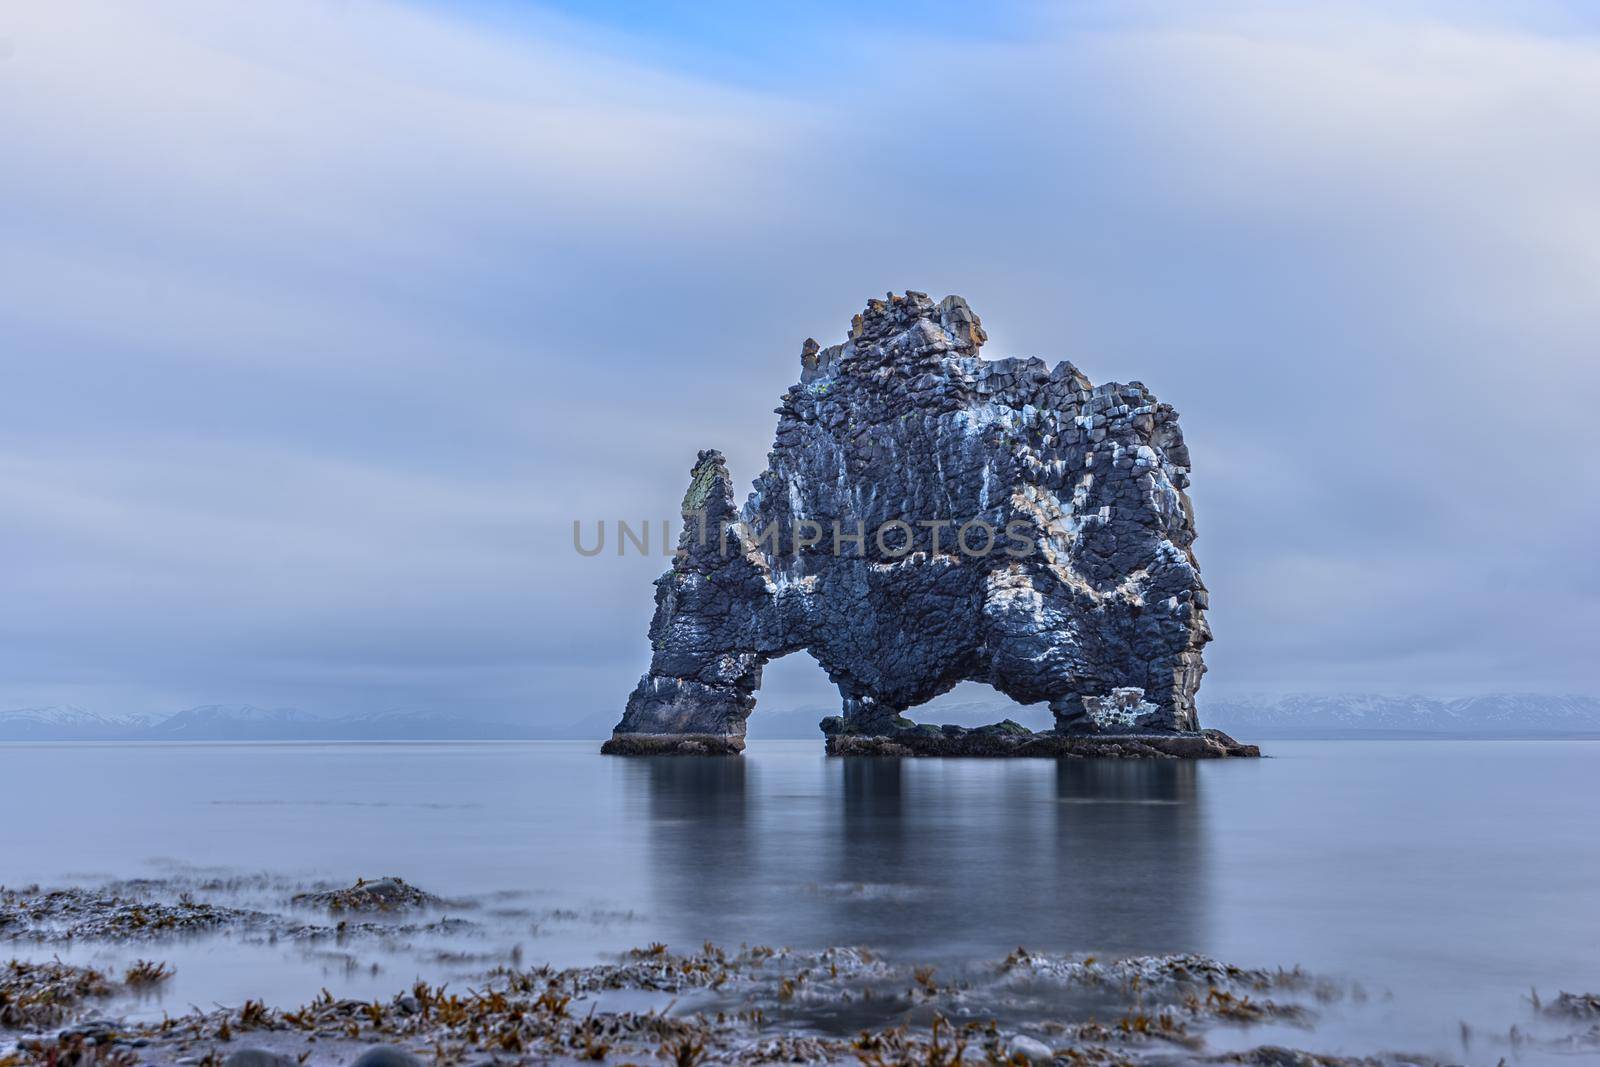 Hvitserkur iconic rock long exposure in iceland time lapse by FerradalFCG